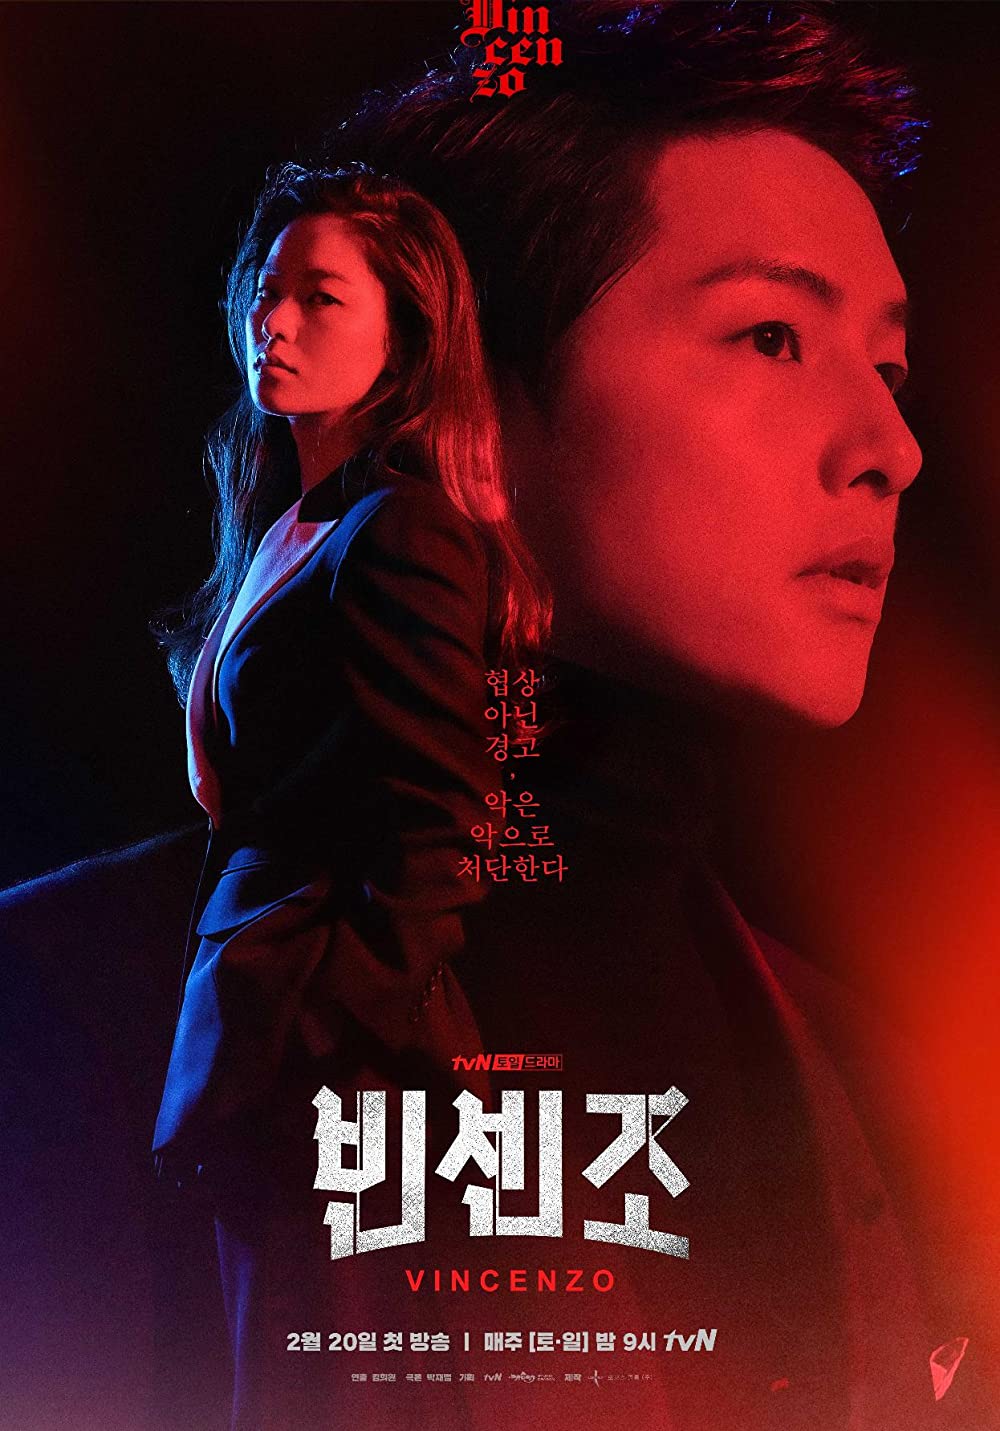 Vincenzo Korean Show on Netflix Poster